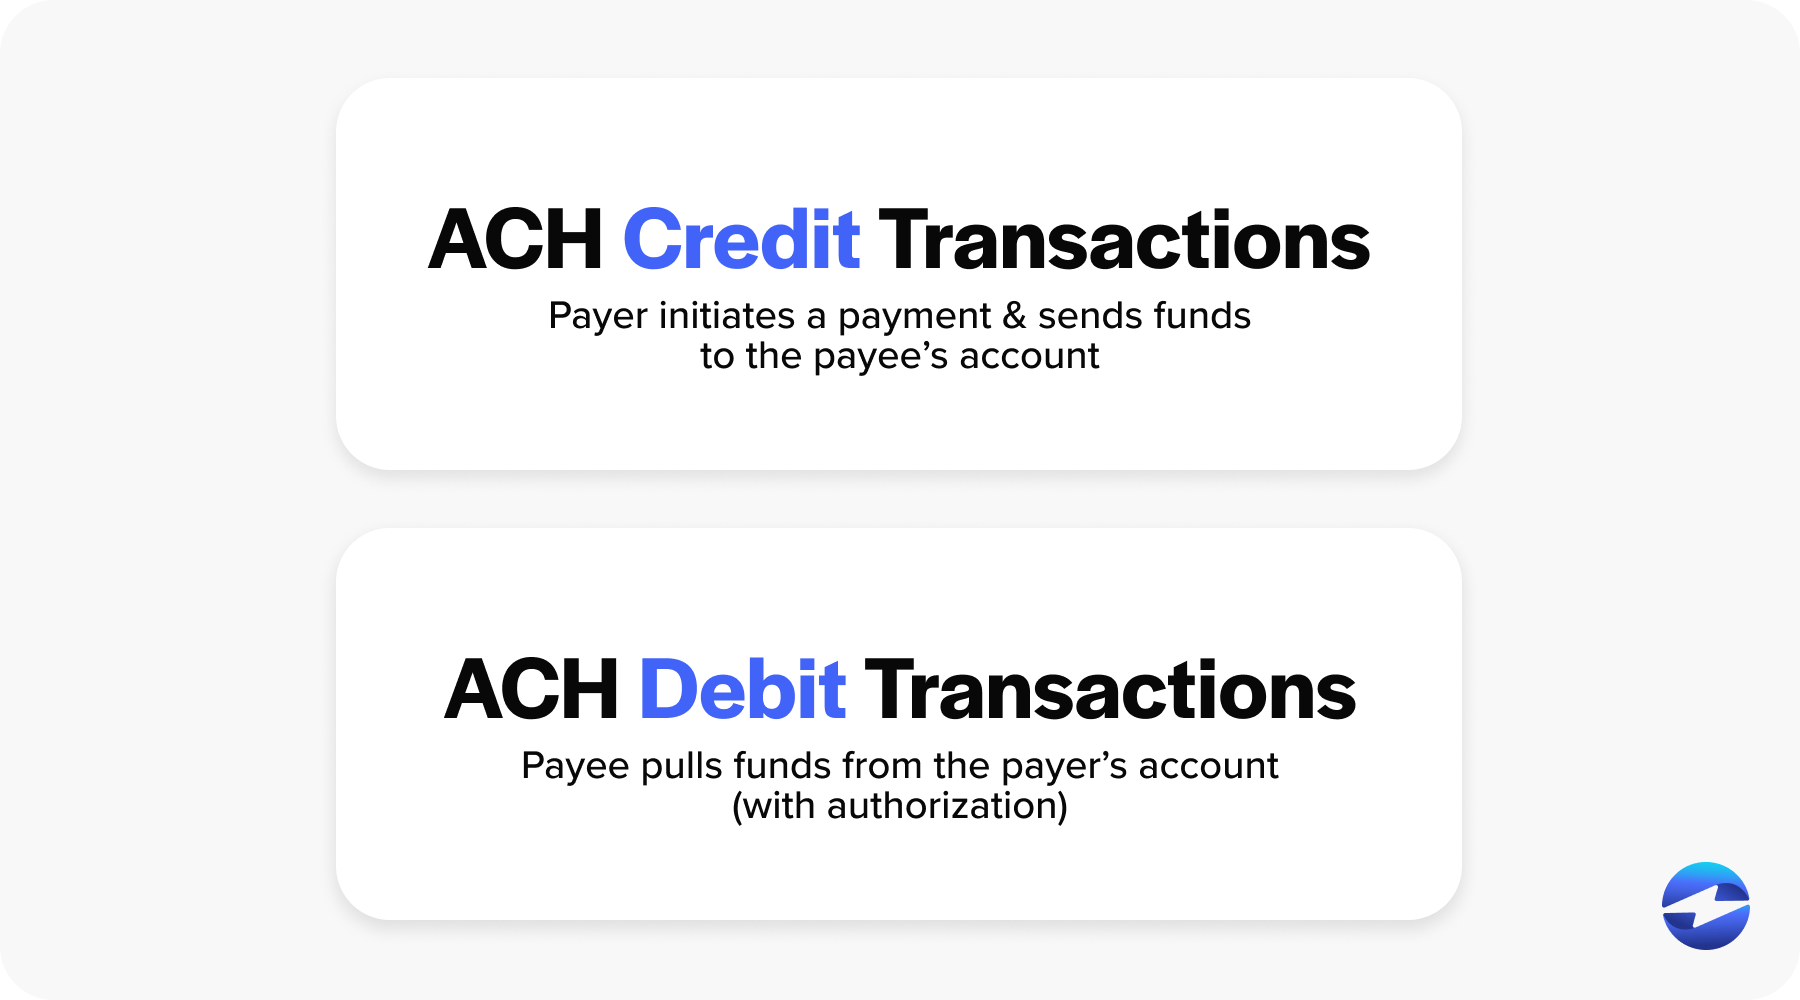 ach credit vs ach debit